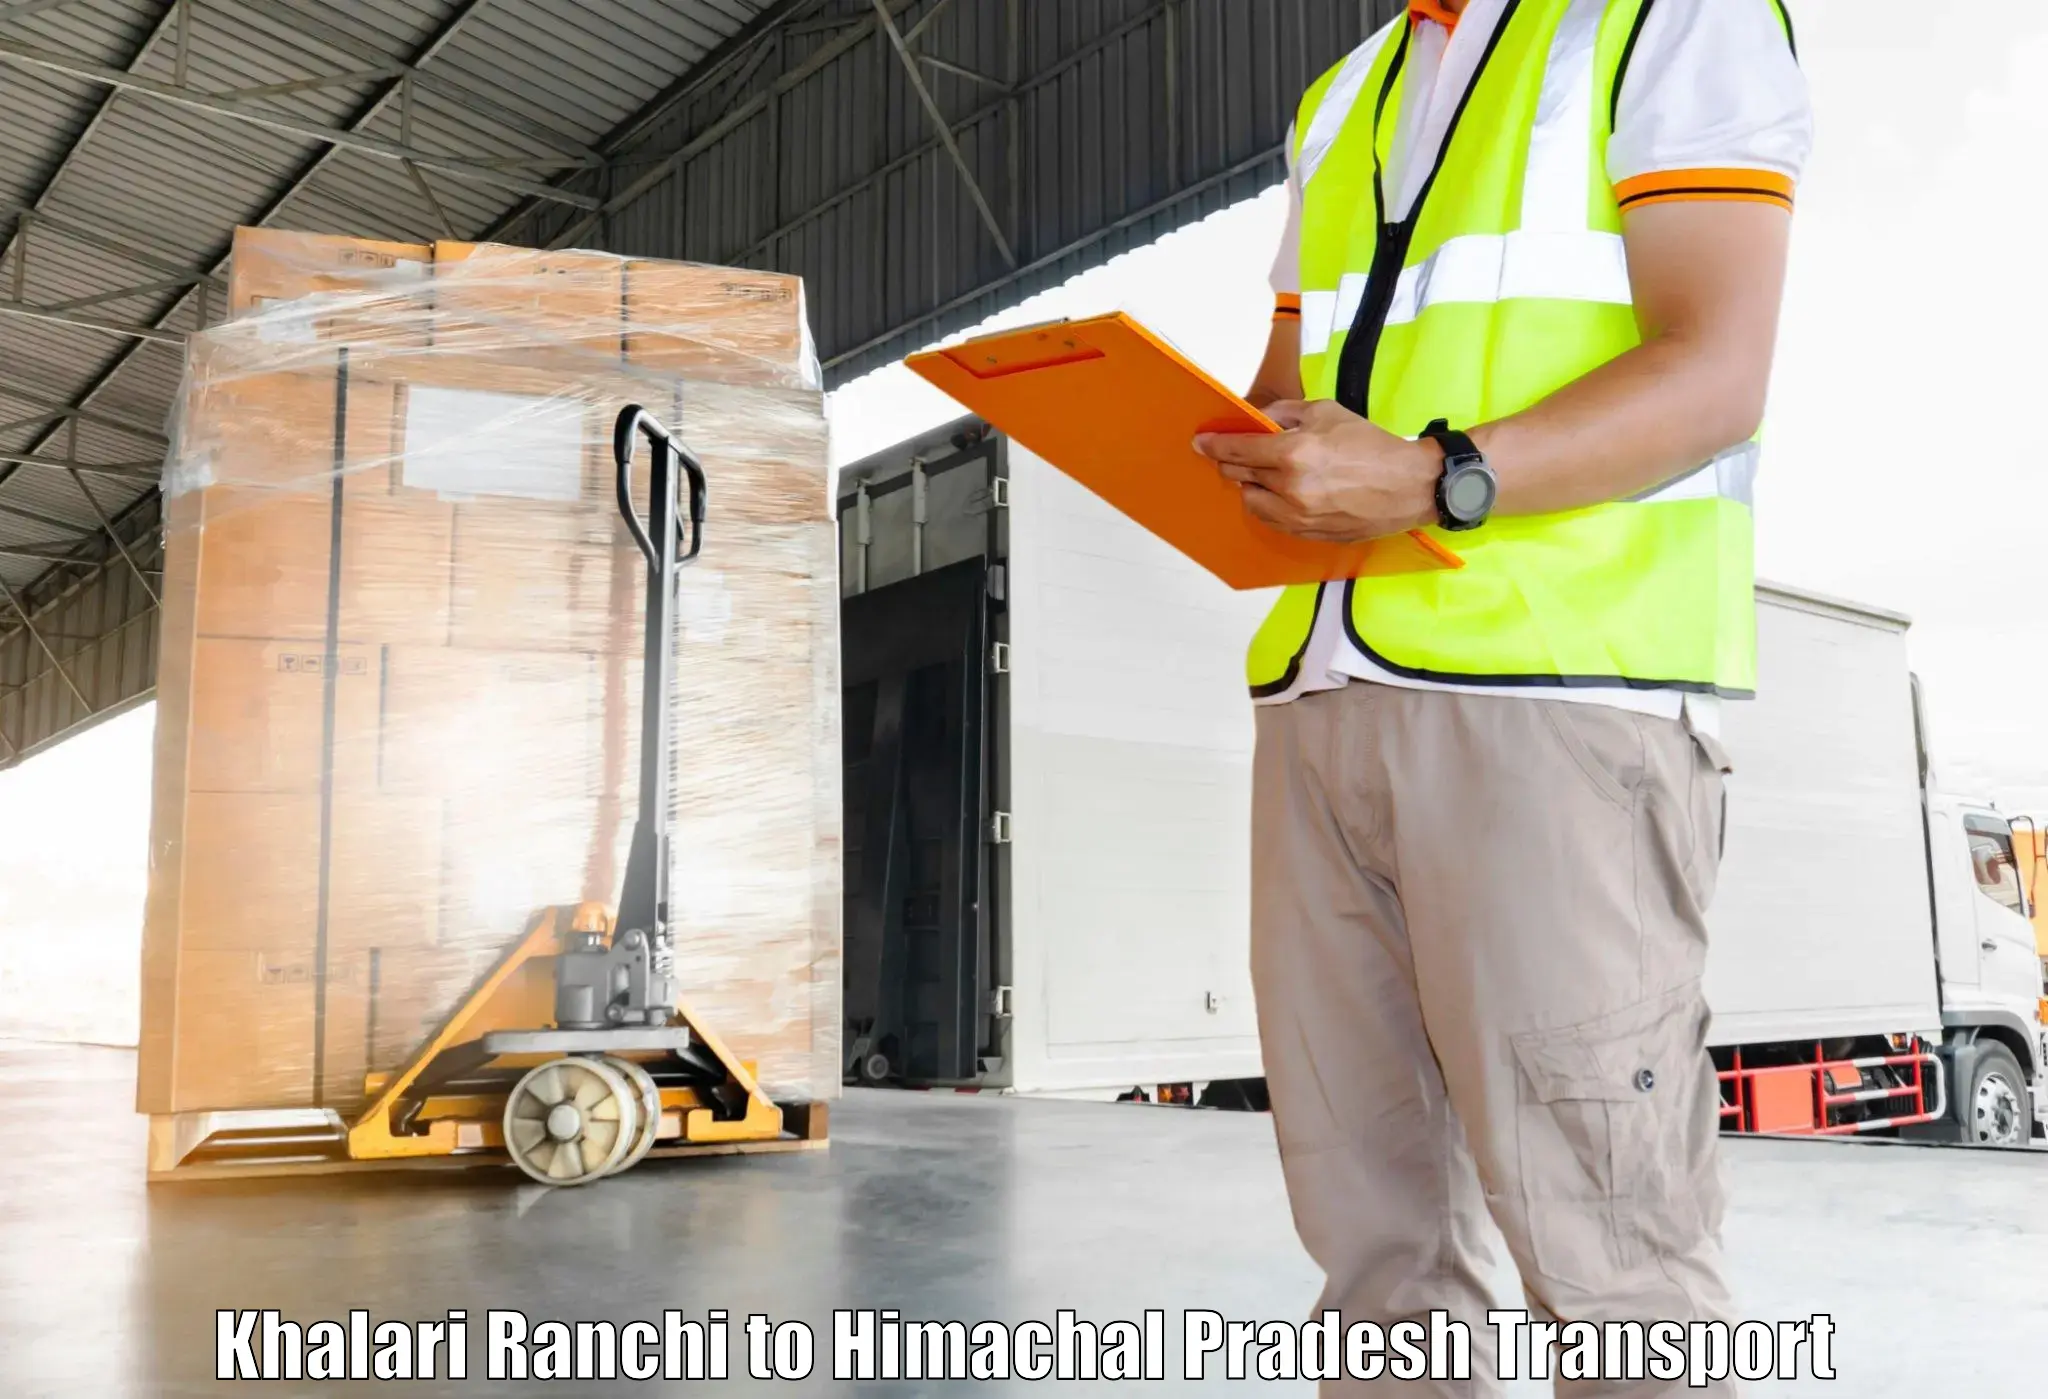 Delivery service Khalari Ranchi to Mandi